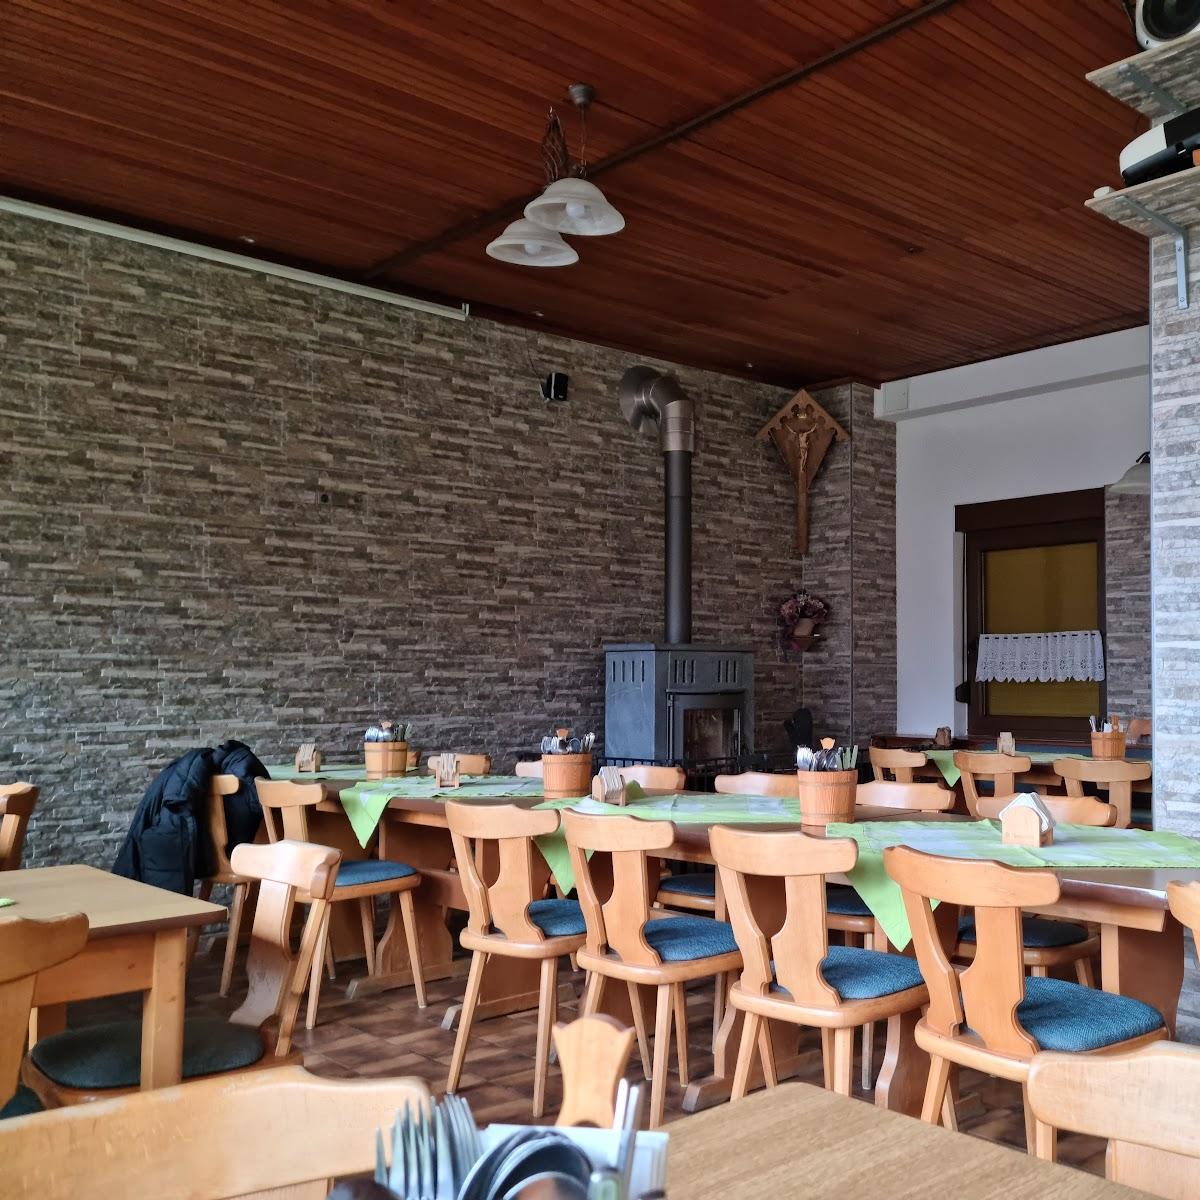 Restaurant "Biergarten" in Lautertal (Odenwald)